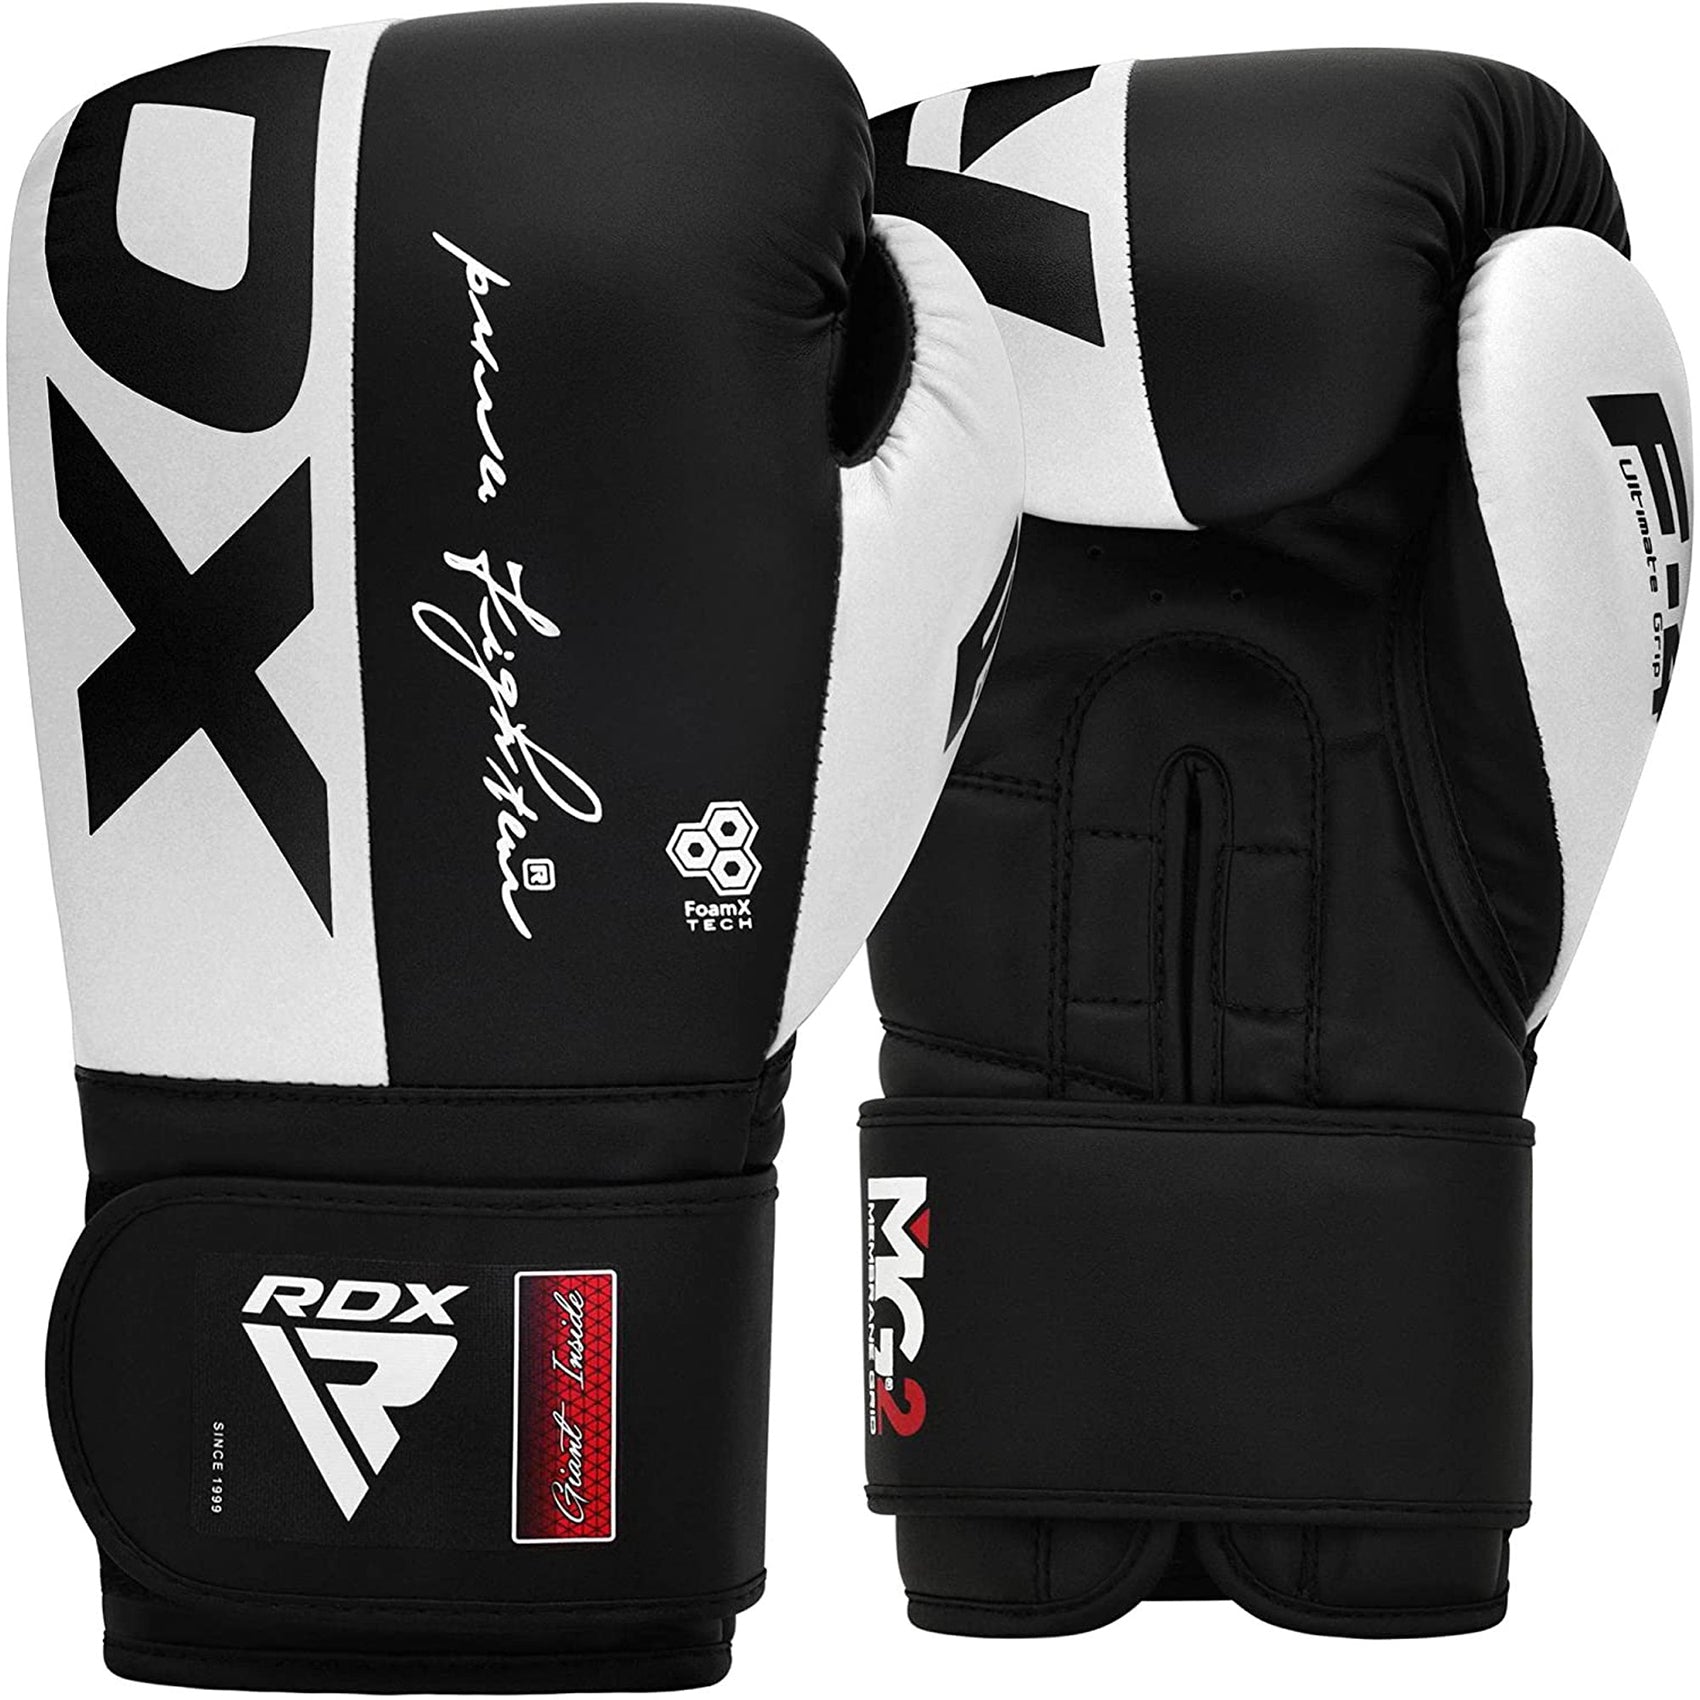 RDX REX F4 MMA, BJJ, Muay Thai, Kickboxing, Training Boxing Gloves - WHITE/BLACK - 12oz - Pro-Distributing